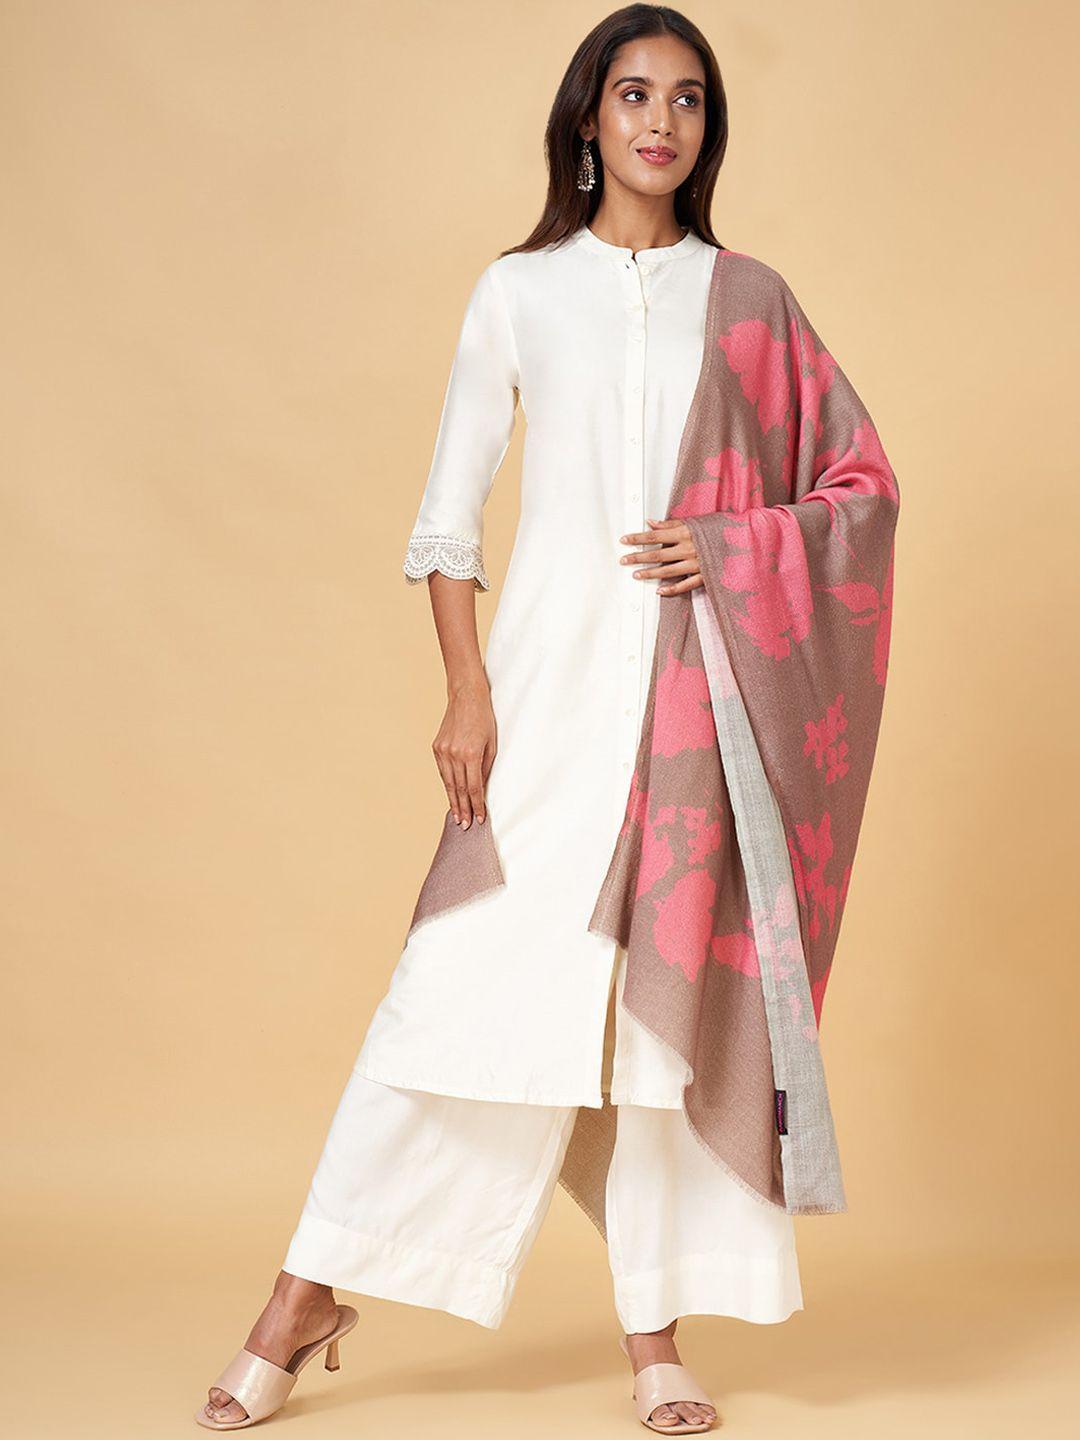 rangmanch by pantaloons floral woven design acrylic shawl